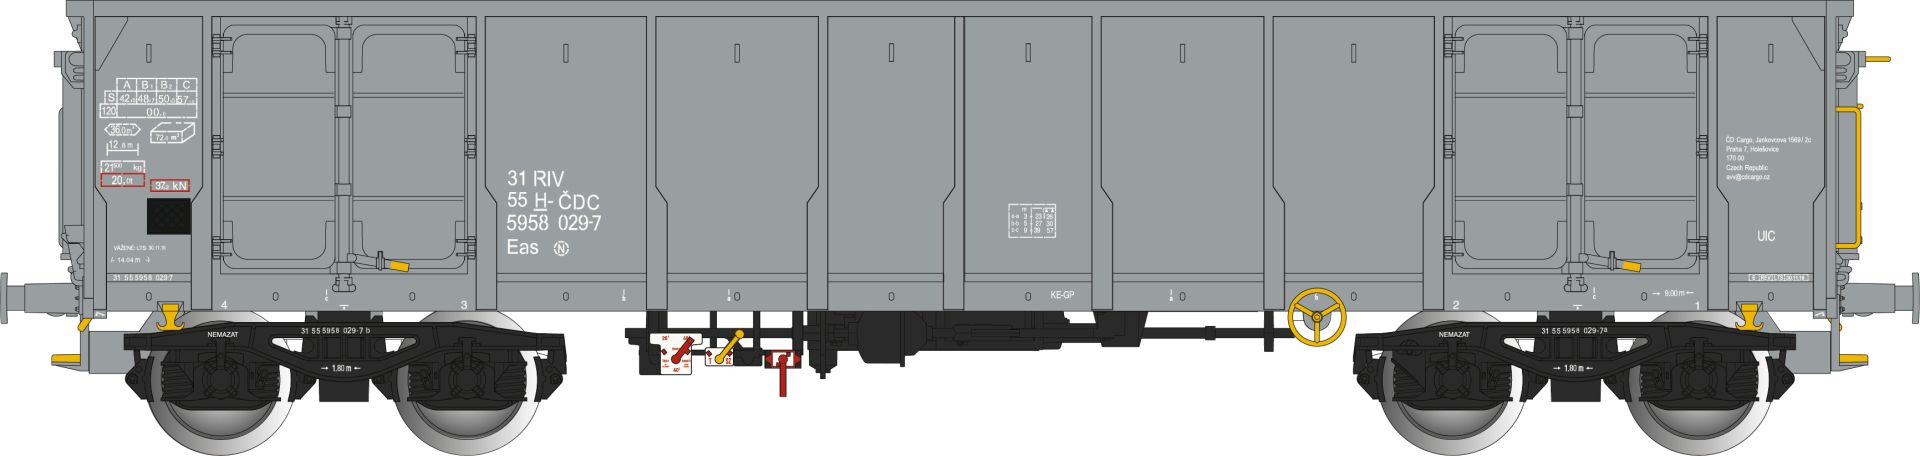 Albert Modell 595022 - Offener Güterwagen Eas, H-CDC, Ep.VI